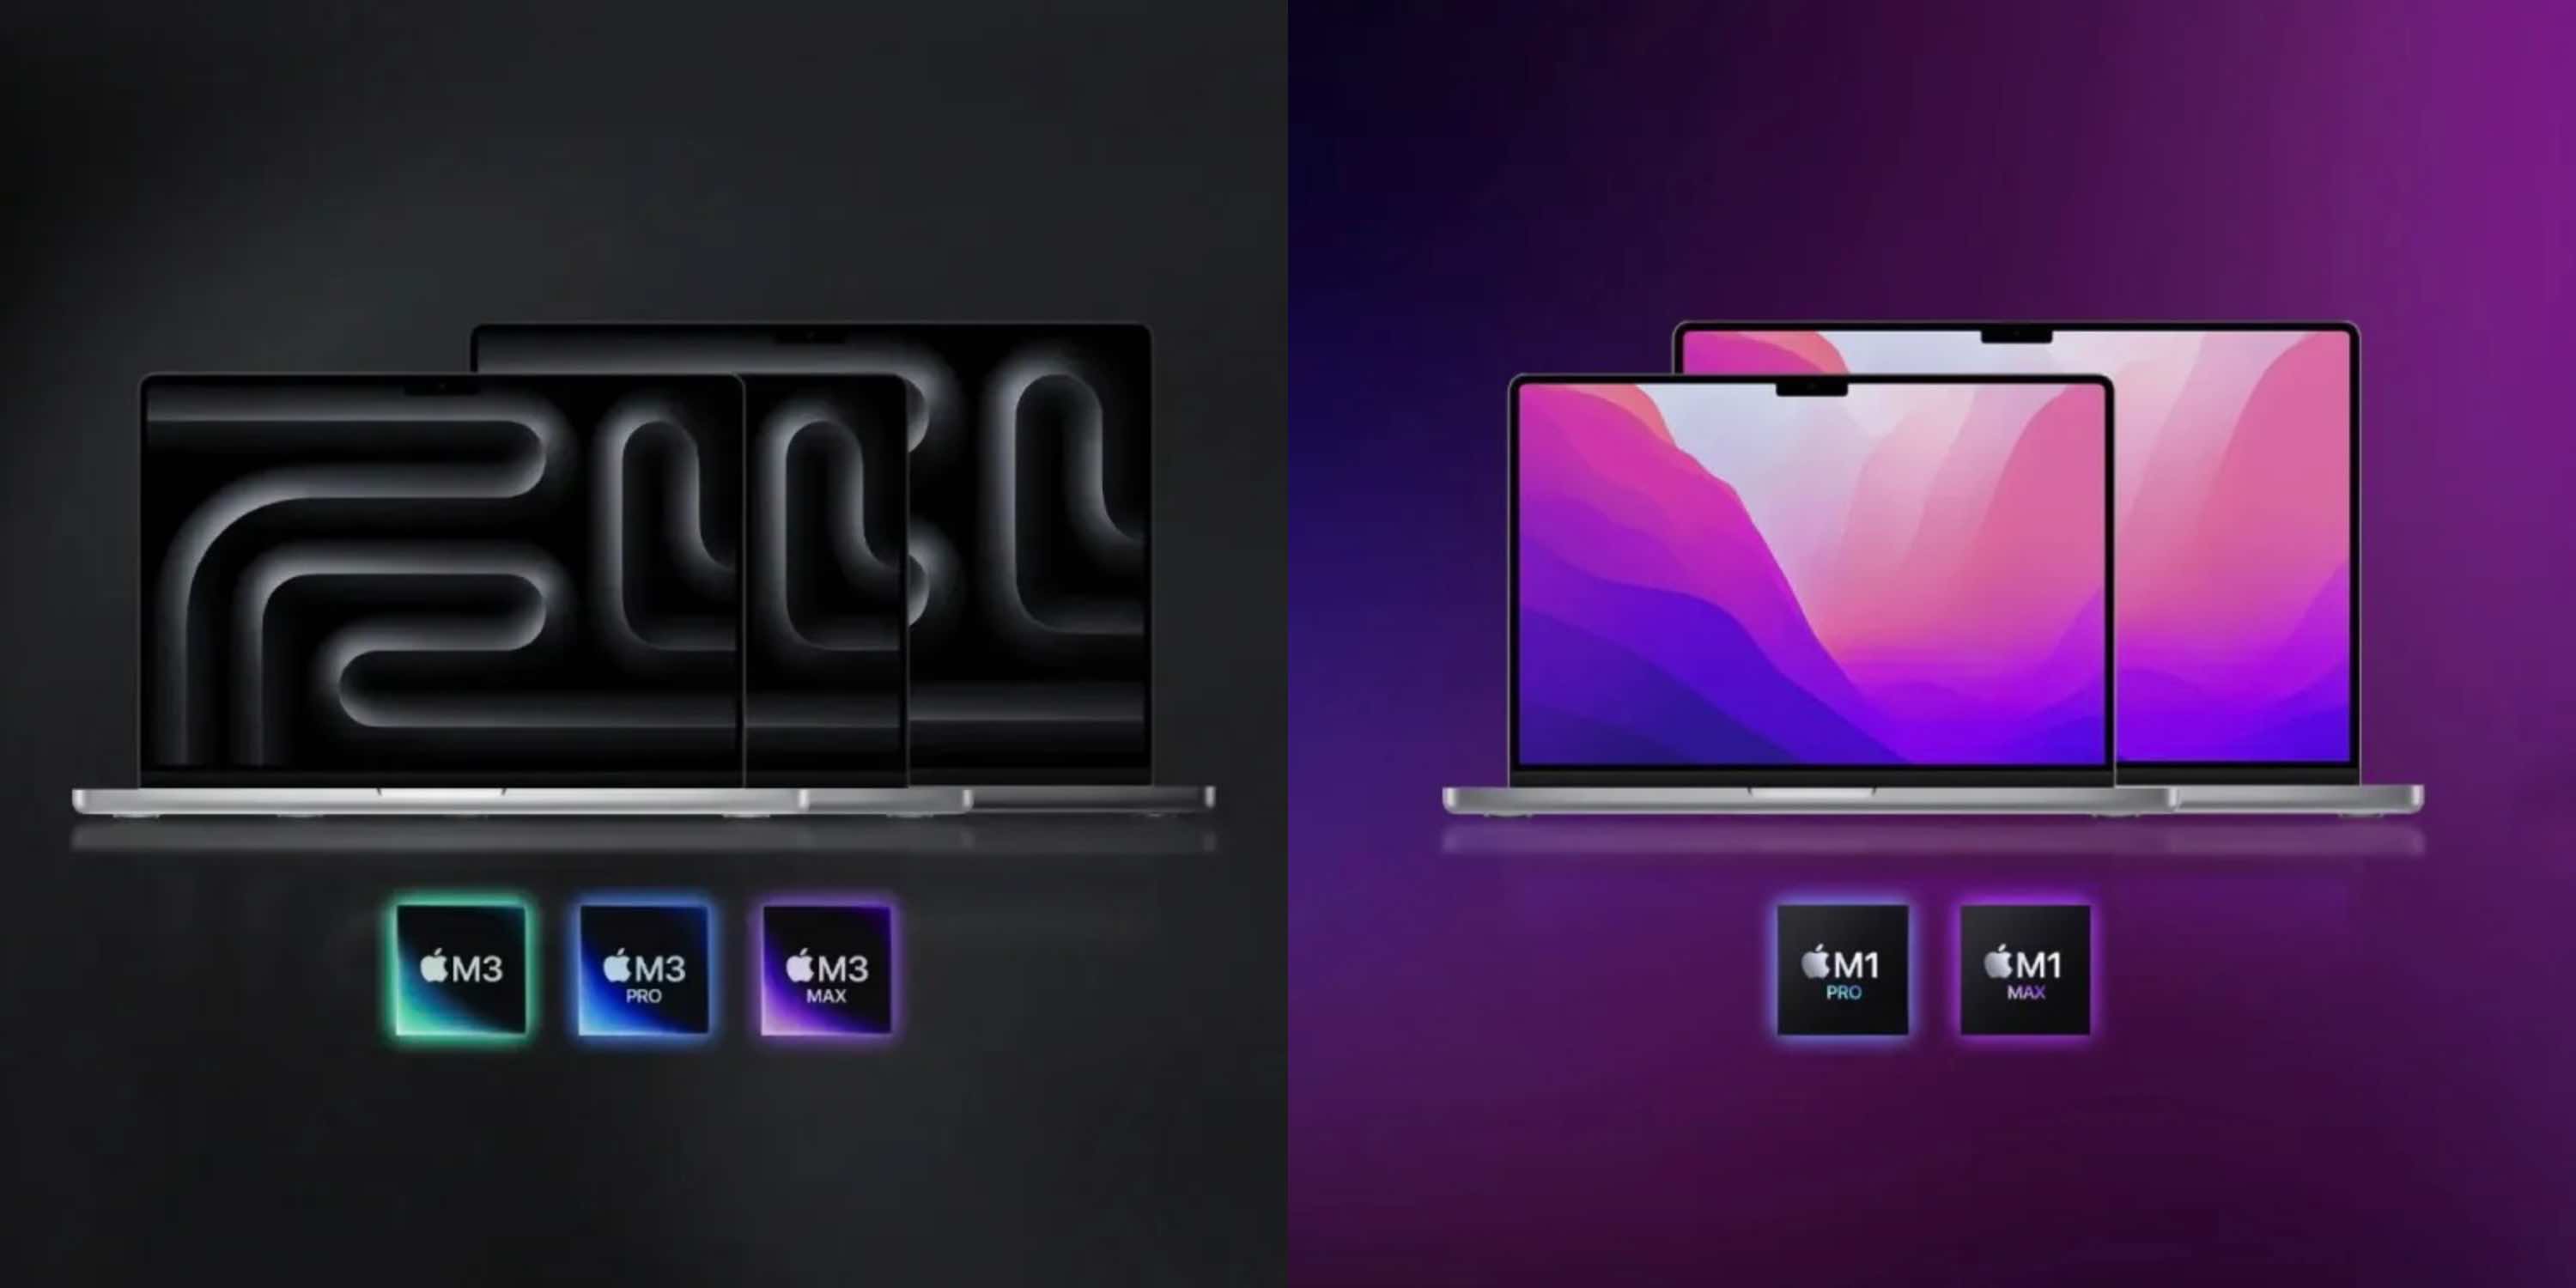 MacBook Pro M3 vs MacBook Pro M3 Pro: Which one should you buy?